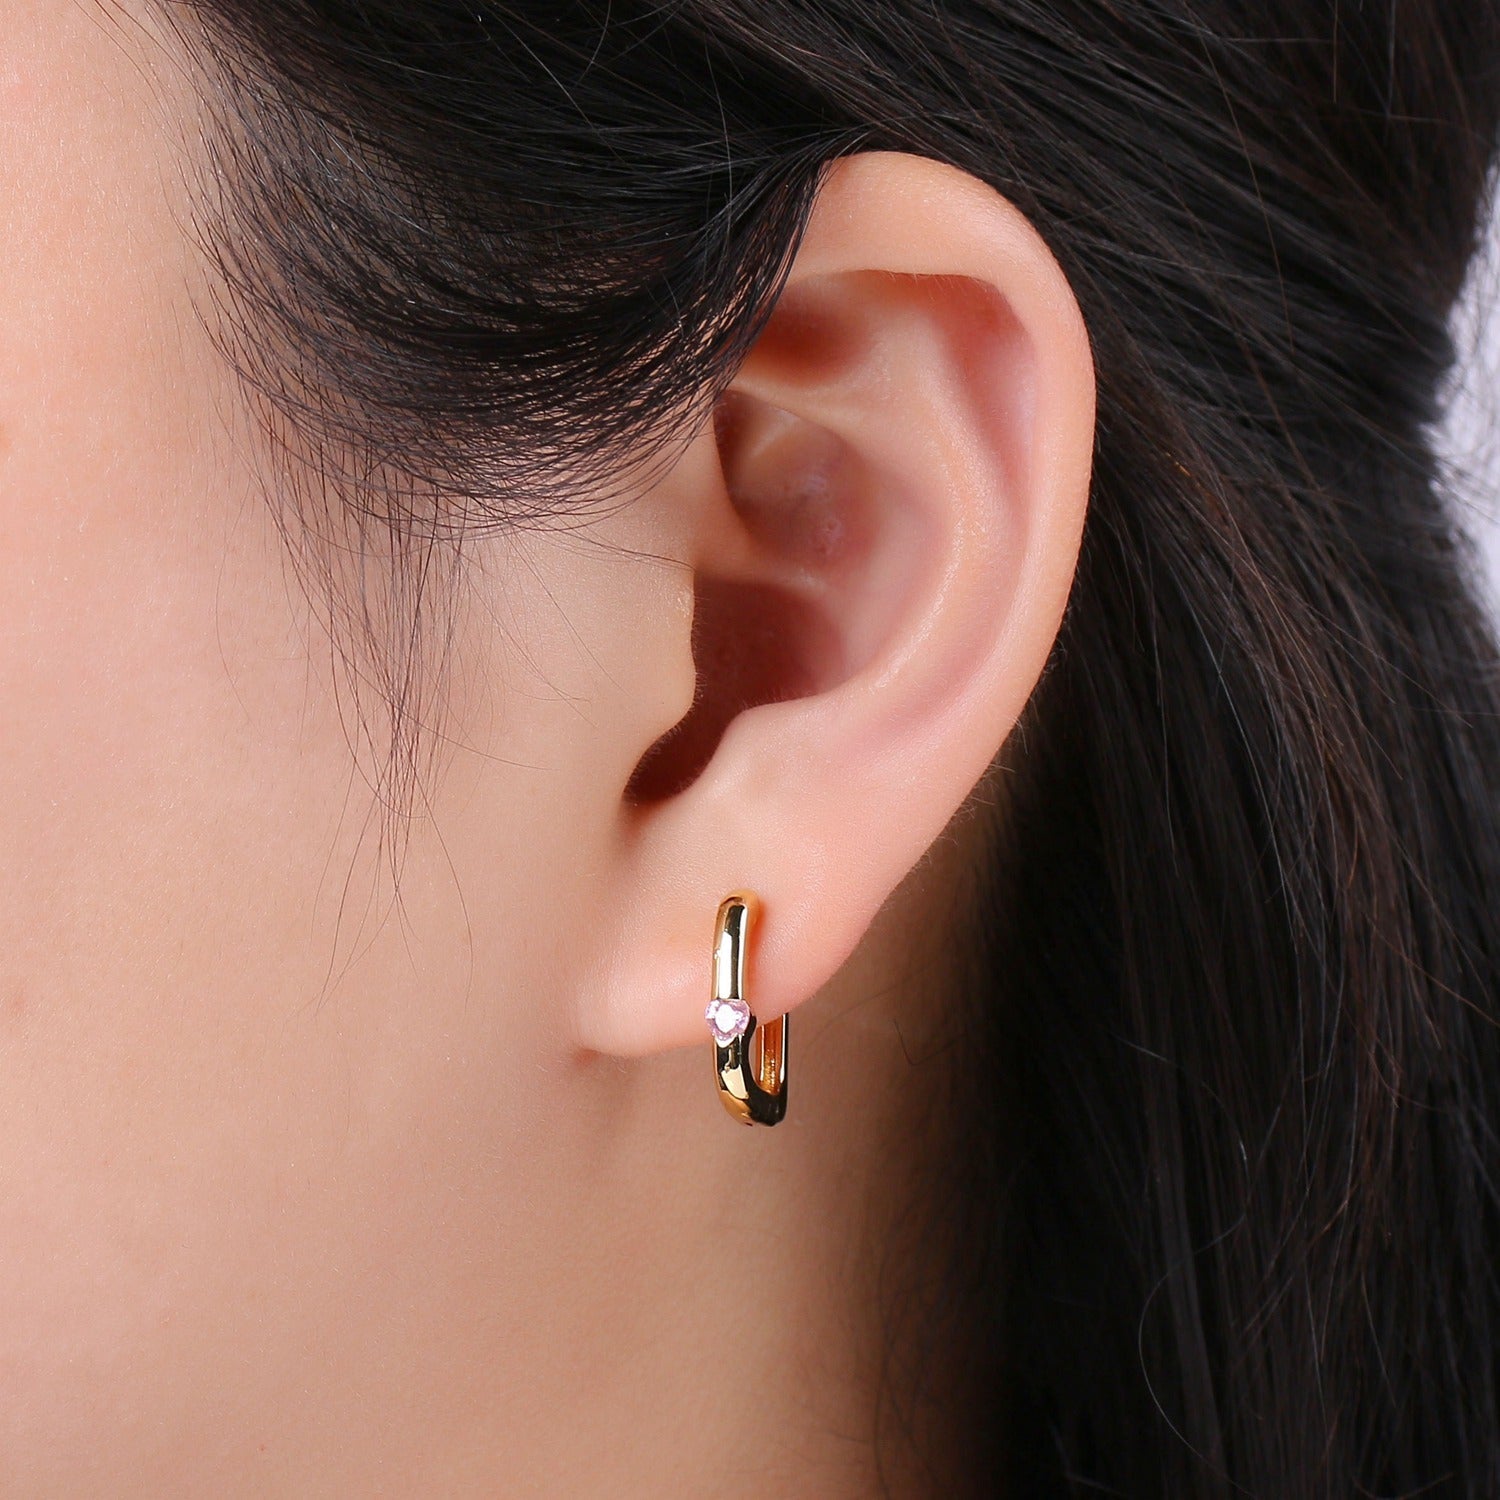 1x Square Hoop Earring with Cz , U-Shape Gold Hoops, 14k Gold Filled Huggie Earrings, Geometric Huggies, Oval Hoop earrings, Mini hoops. - DLUXCA